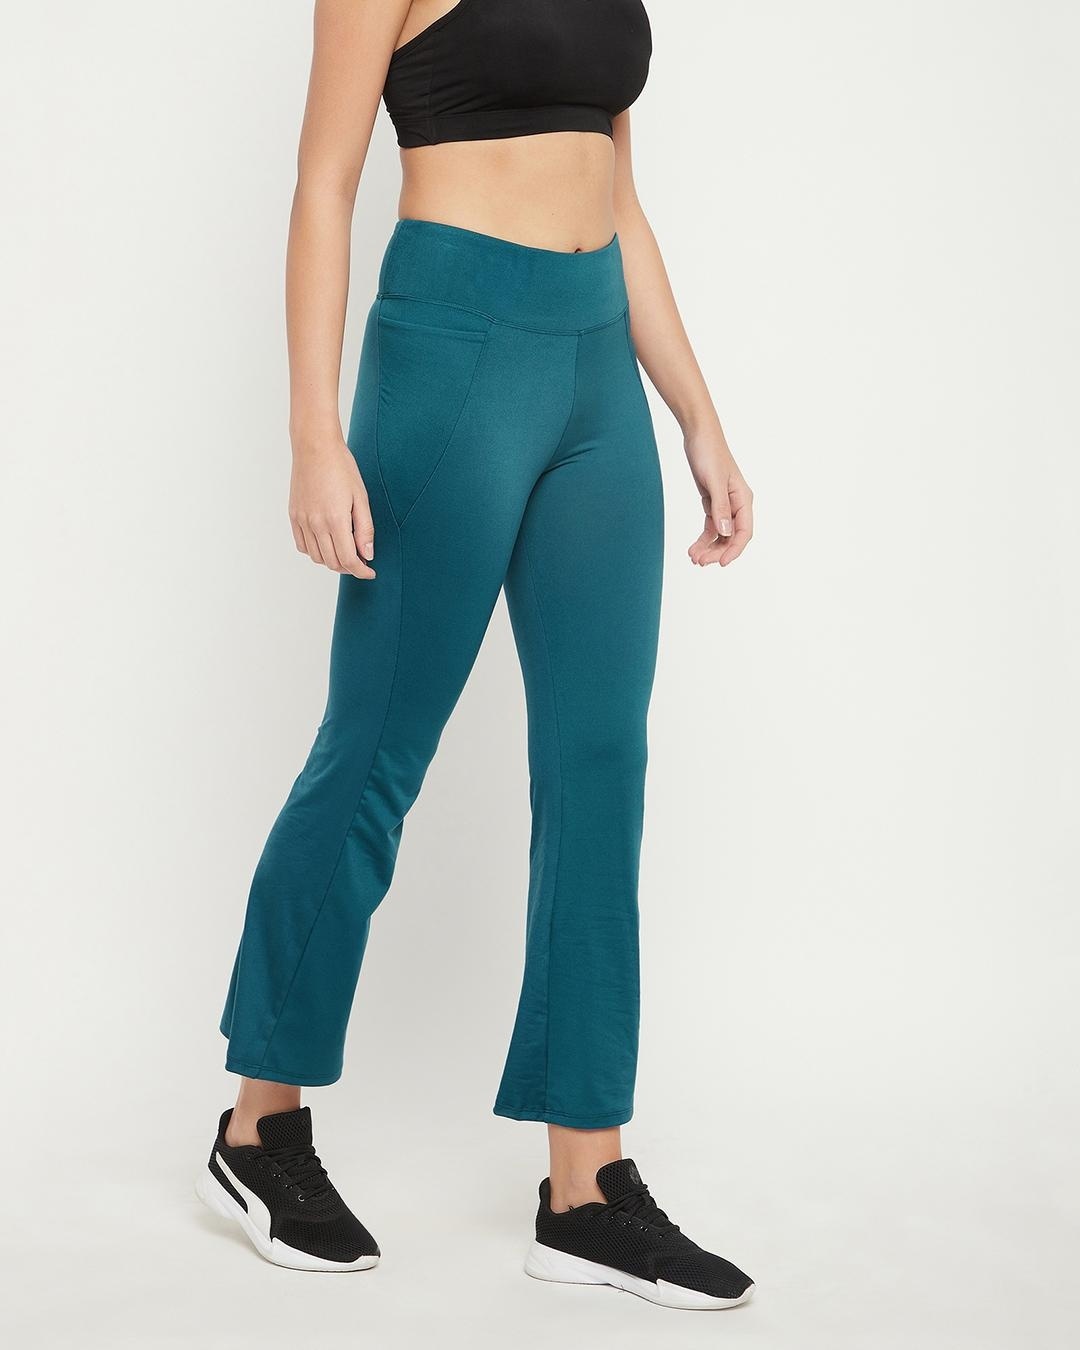 Shop Women's Green Flared Slim Fit Yoga Pants-Design